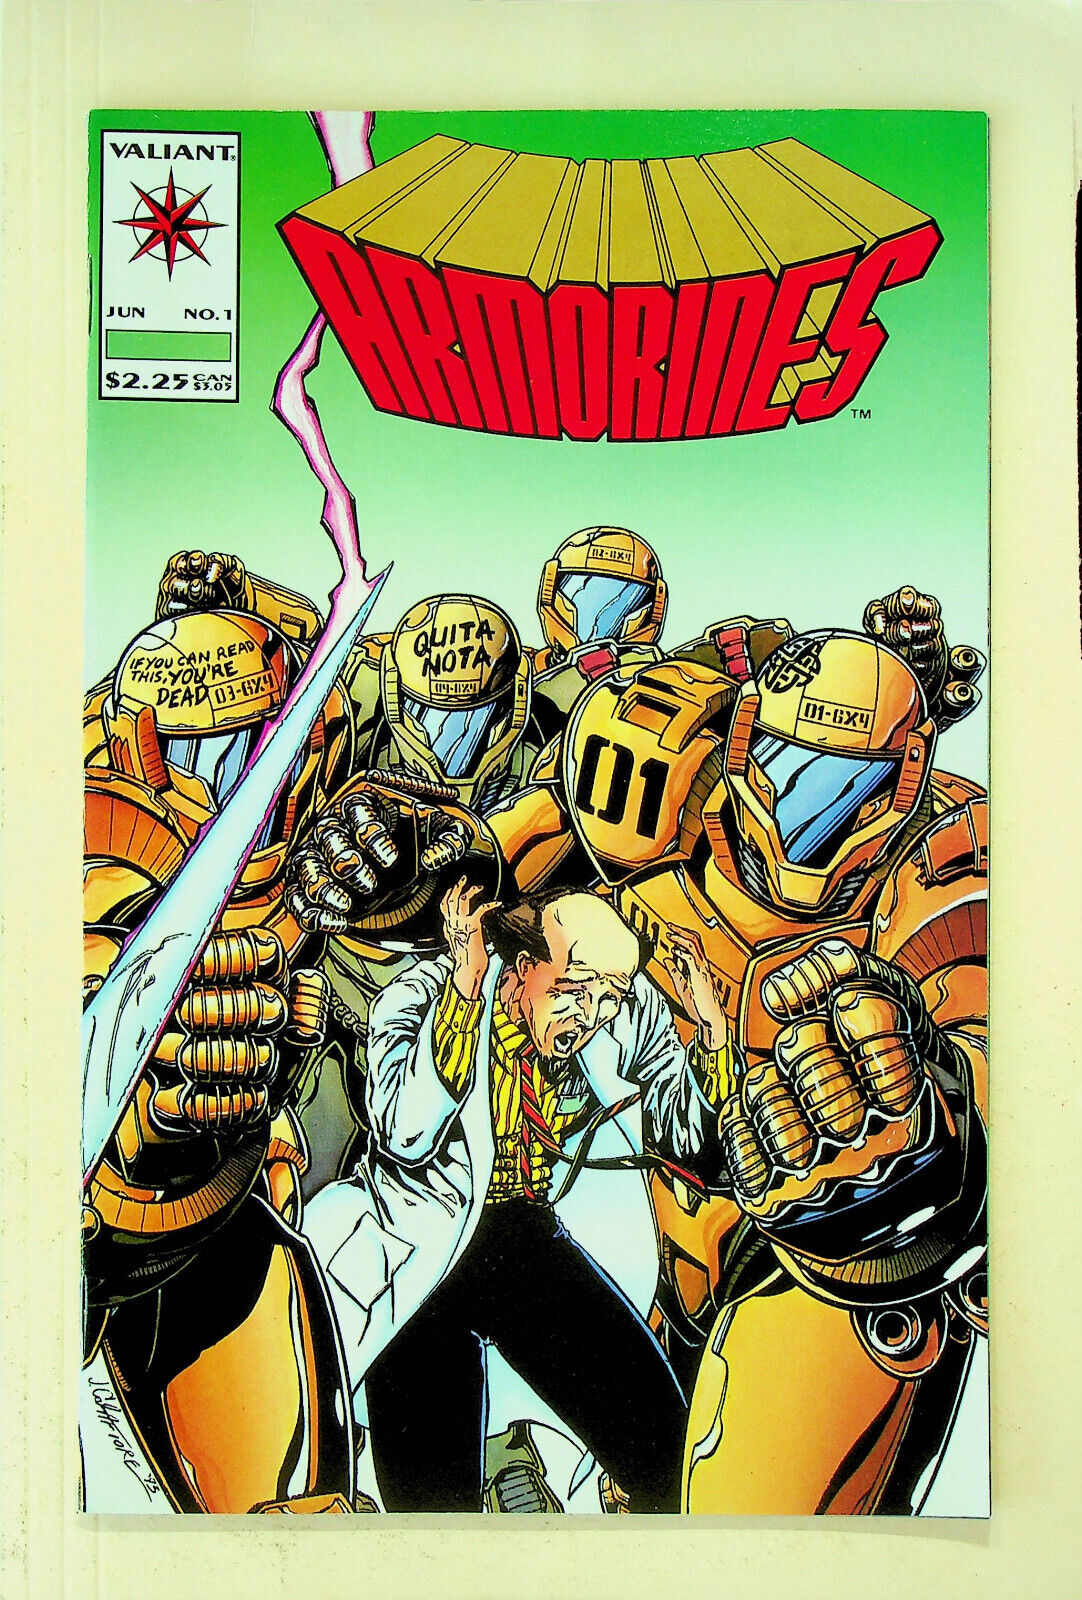 Armorines #1 (Jun 1994, Valiant) - Near Mint